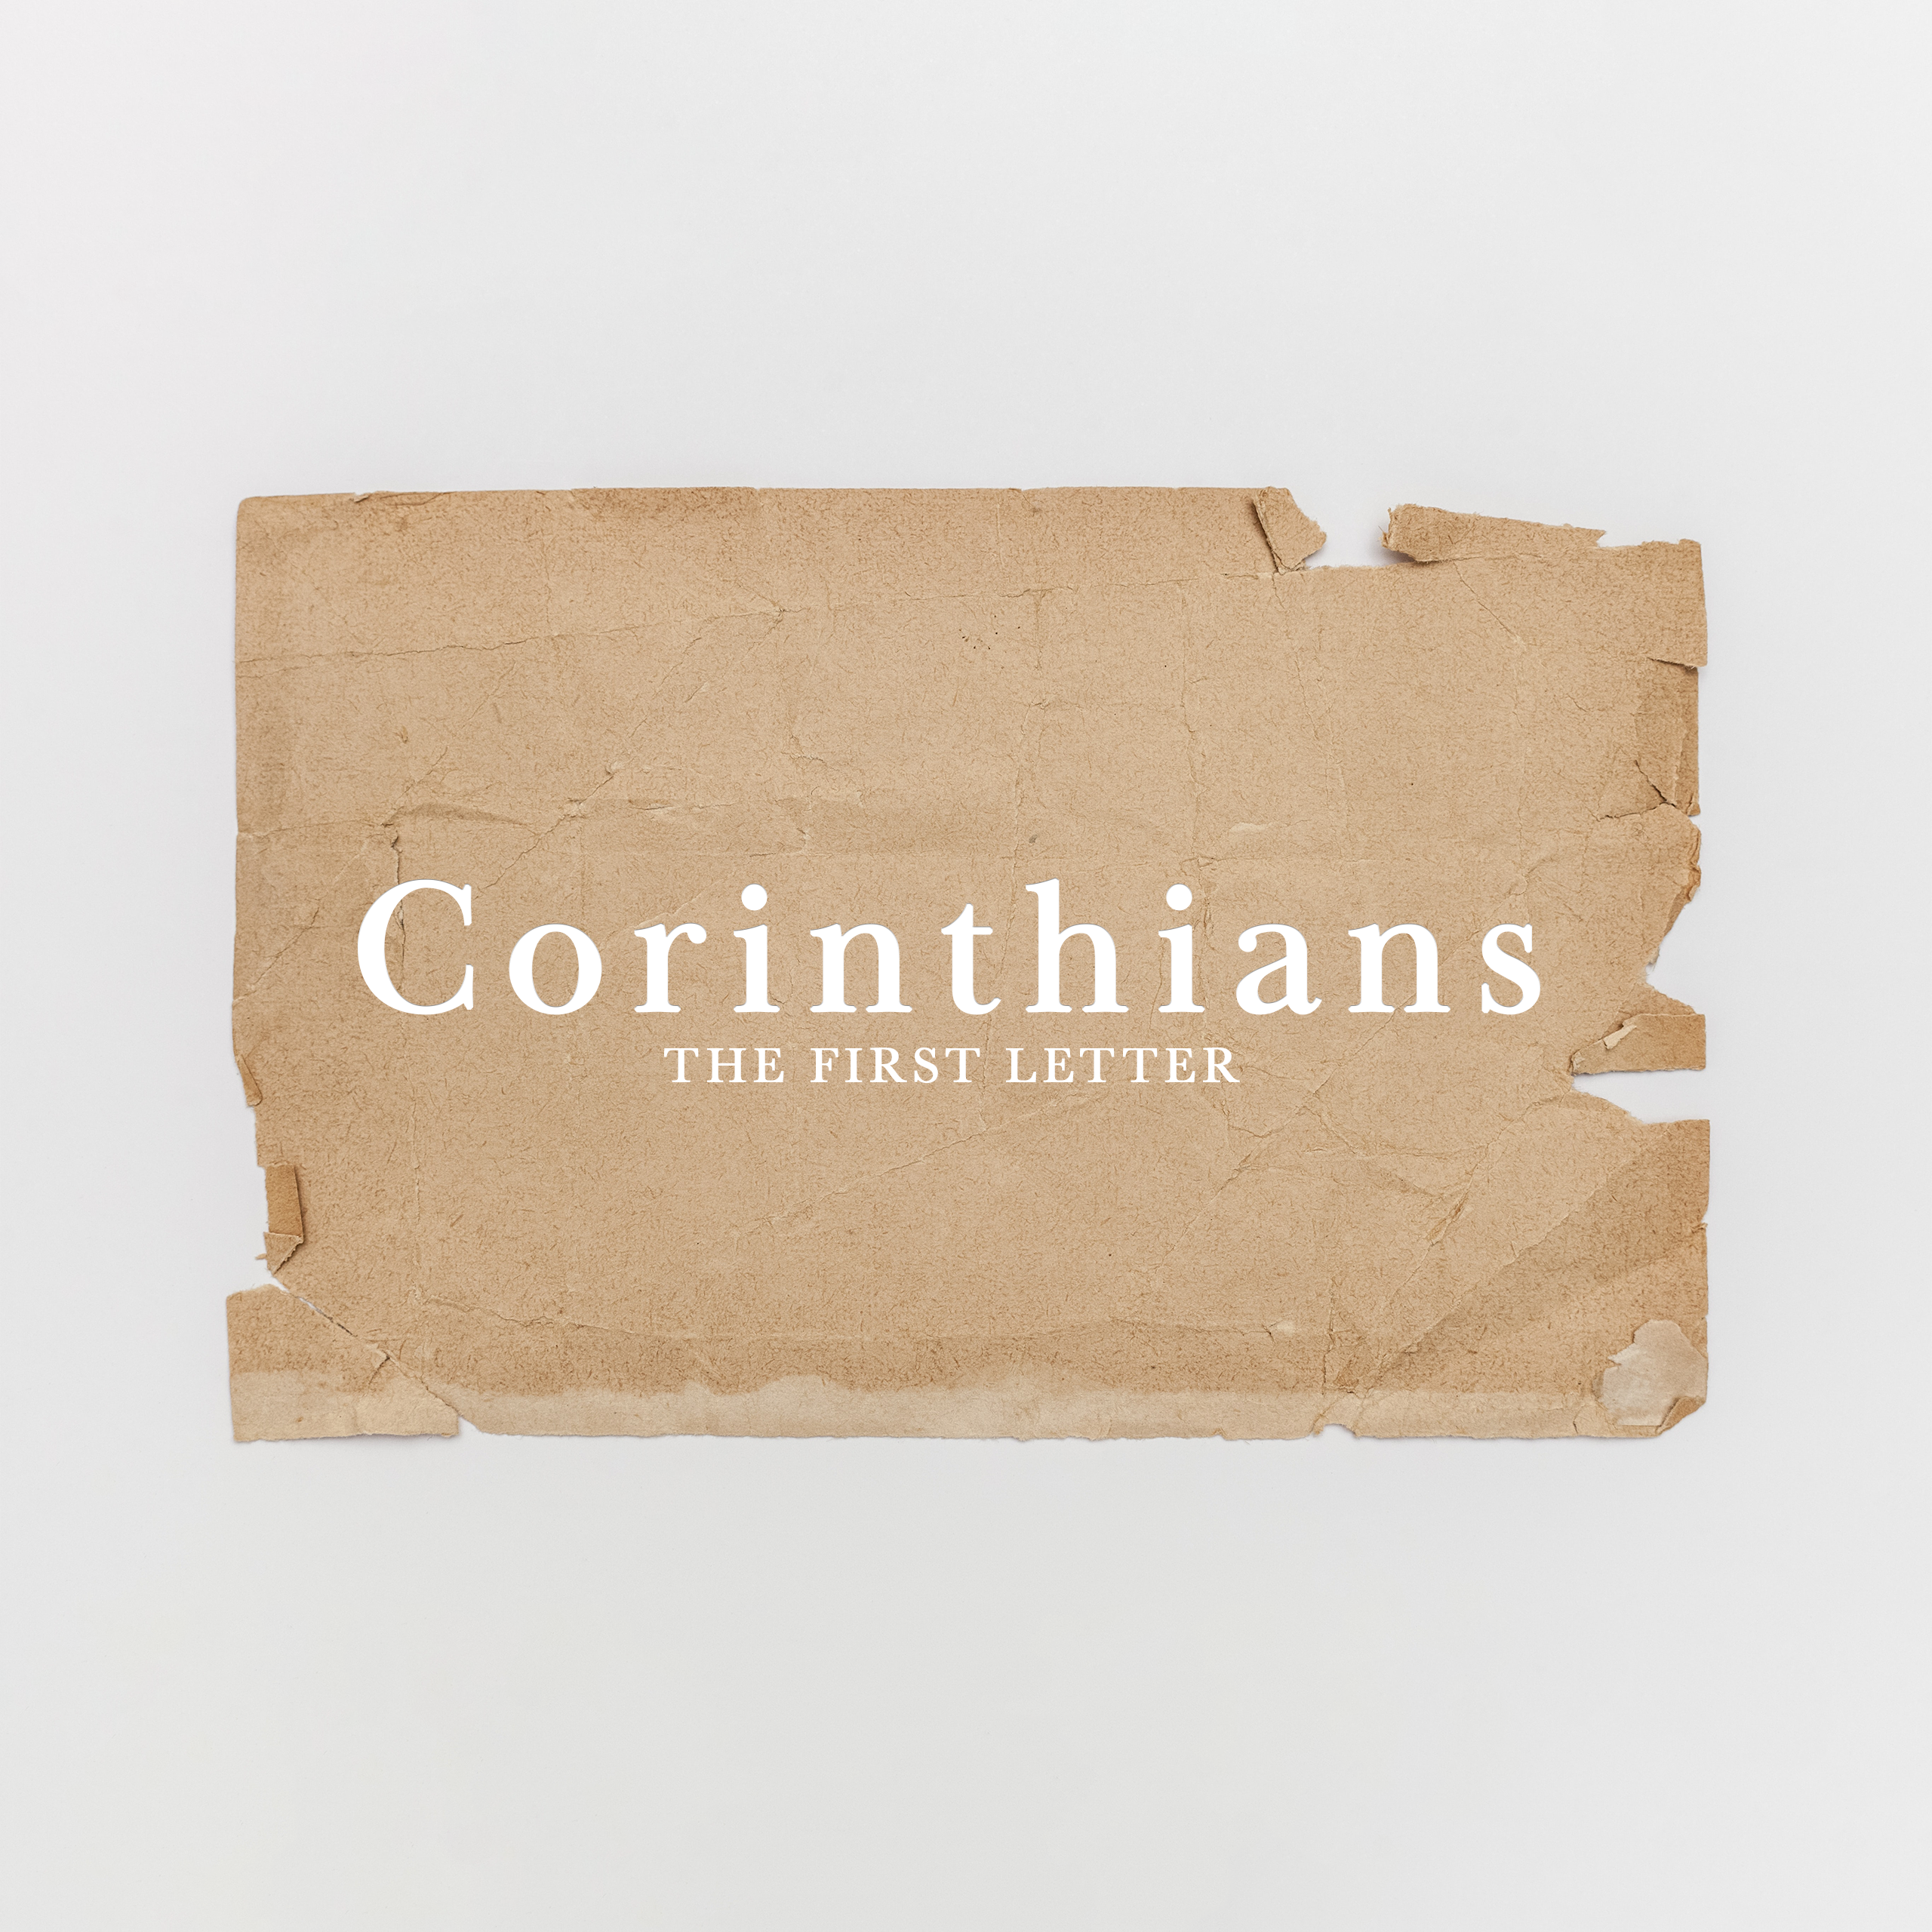 1 Corinthians 9